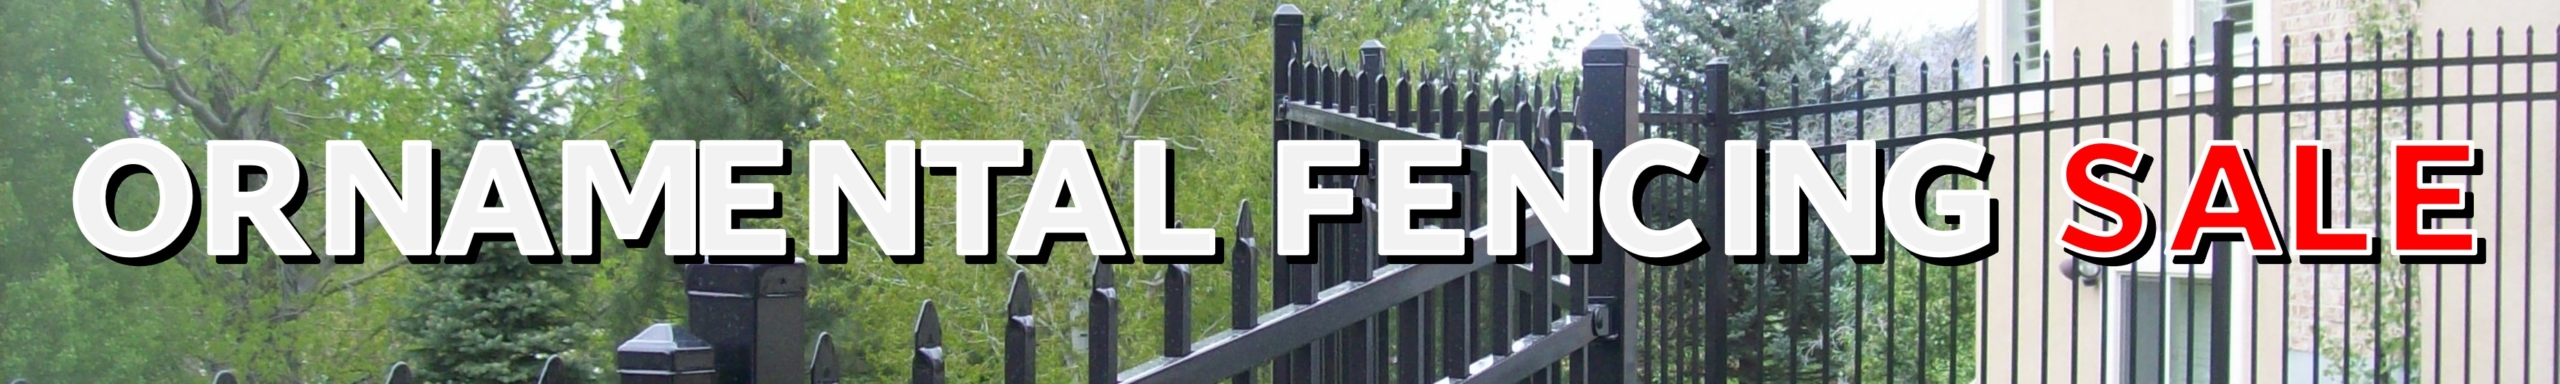 Ornamental Iron Fencing Sale Banner